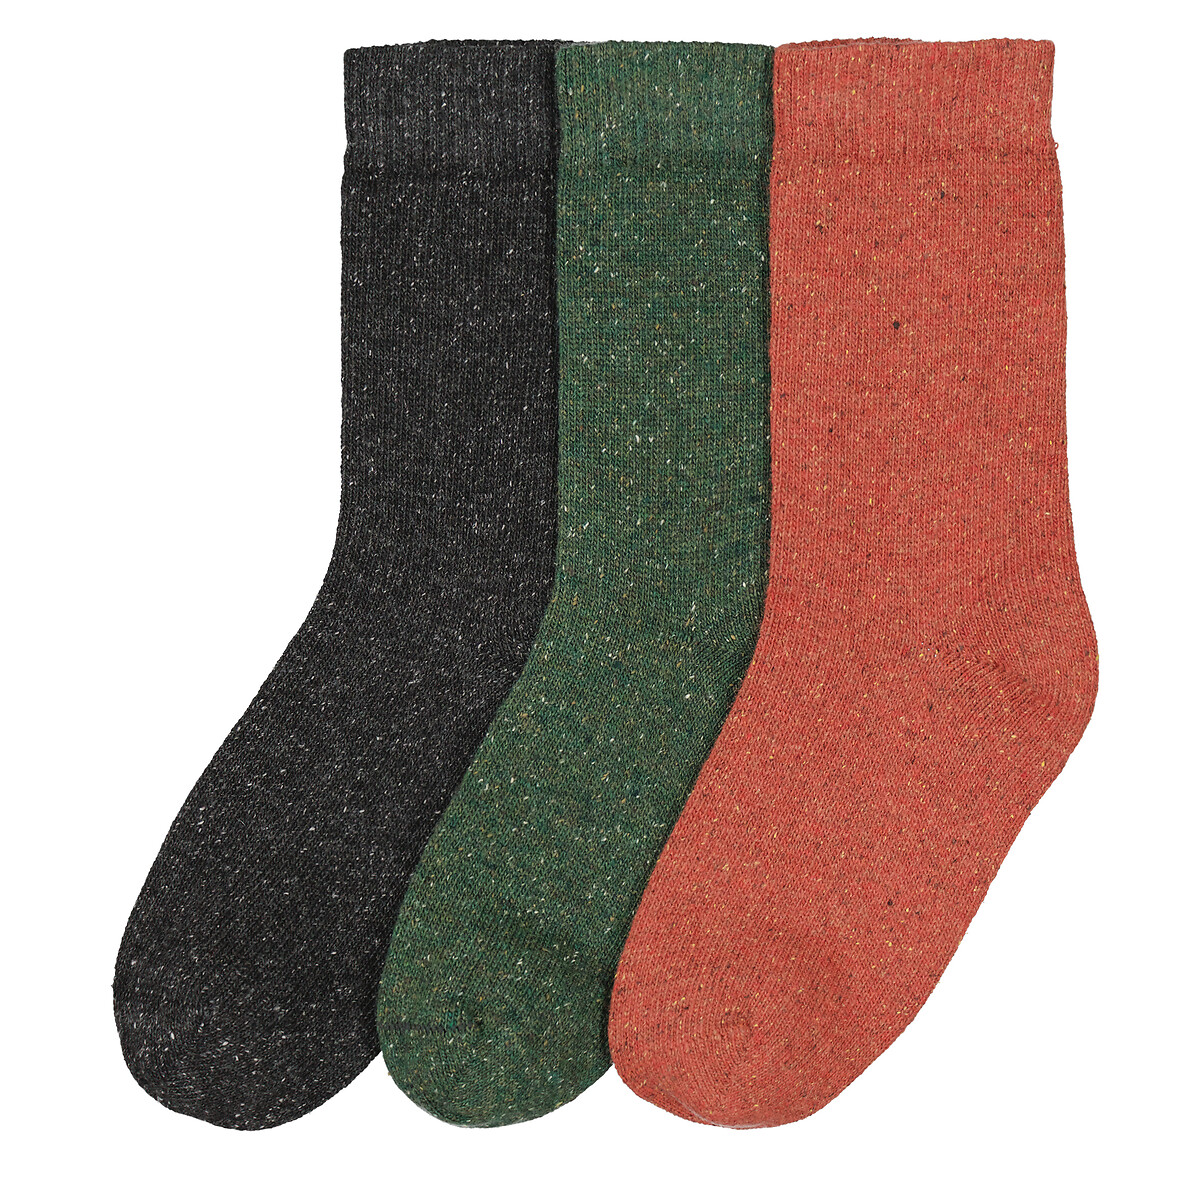 Pack of 3 Pairs of Plain Warm Socks